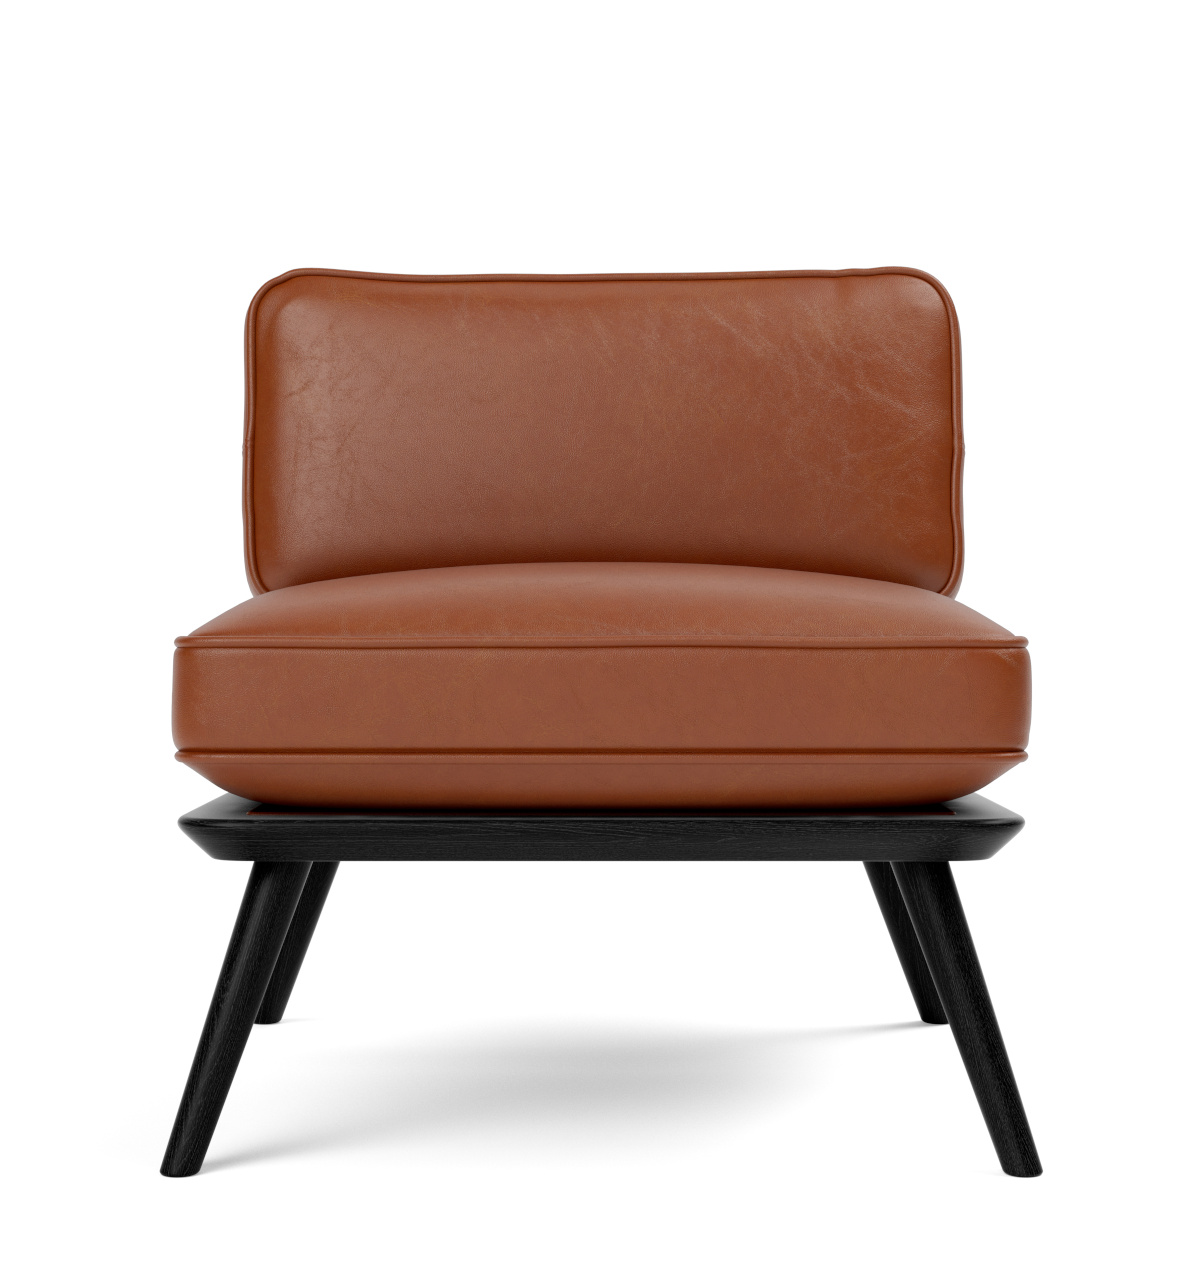 Spine Lounge Suite Chair Petit, esche schwarz / leder cera 905 russet brown